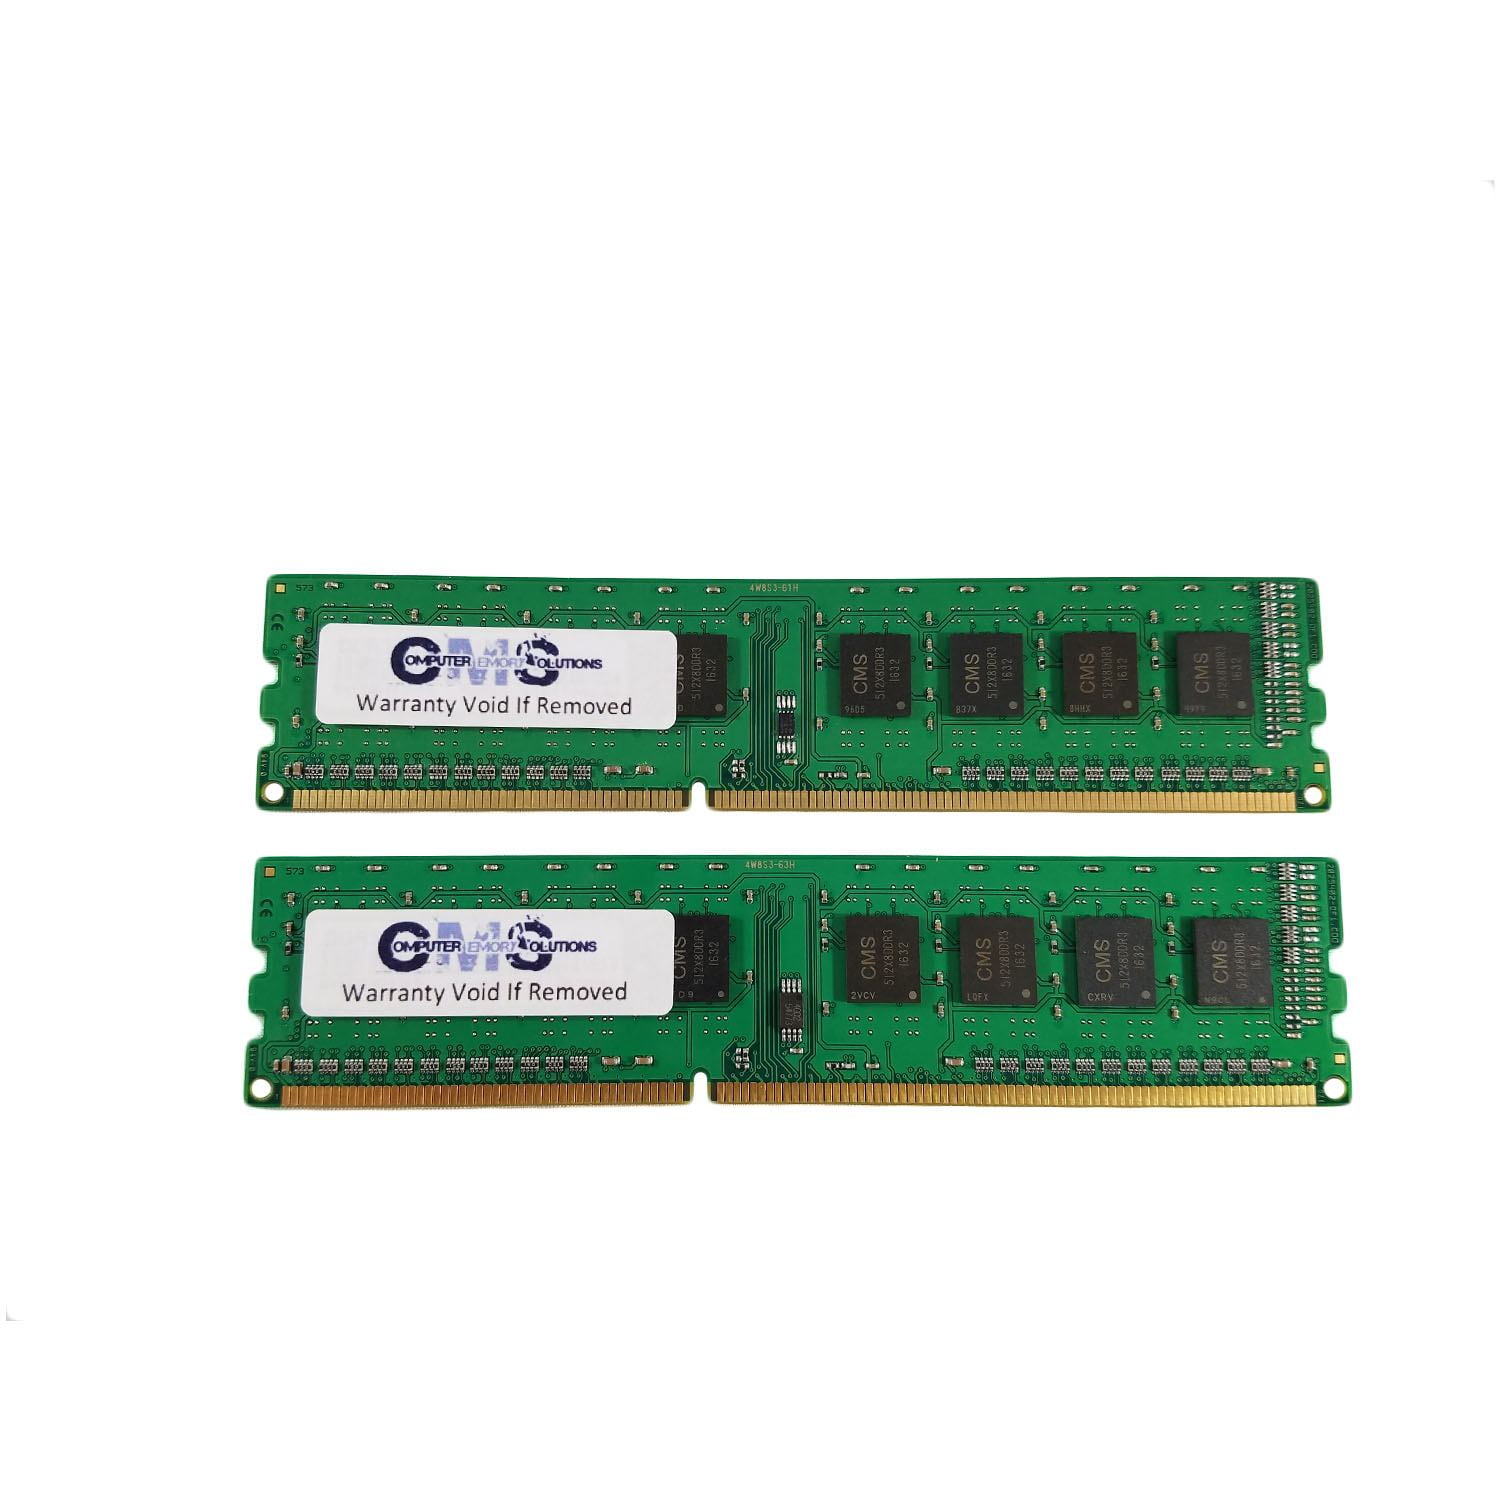 PARTS-QUICK Brand ZBOX CI660 Nano Plus DDR4 2400MHz SODIMM RAM 16GB Memory for ZOTAC ZBOX CI660 Nano